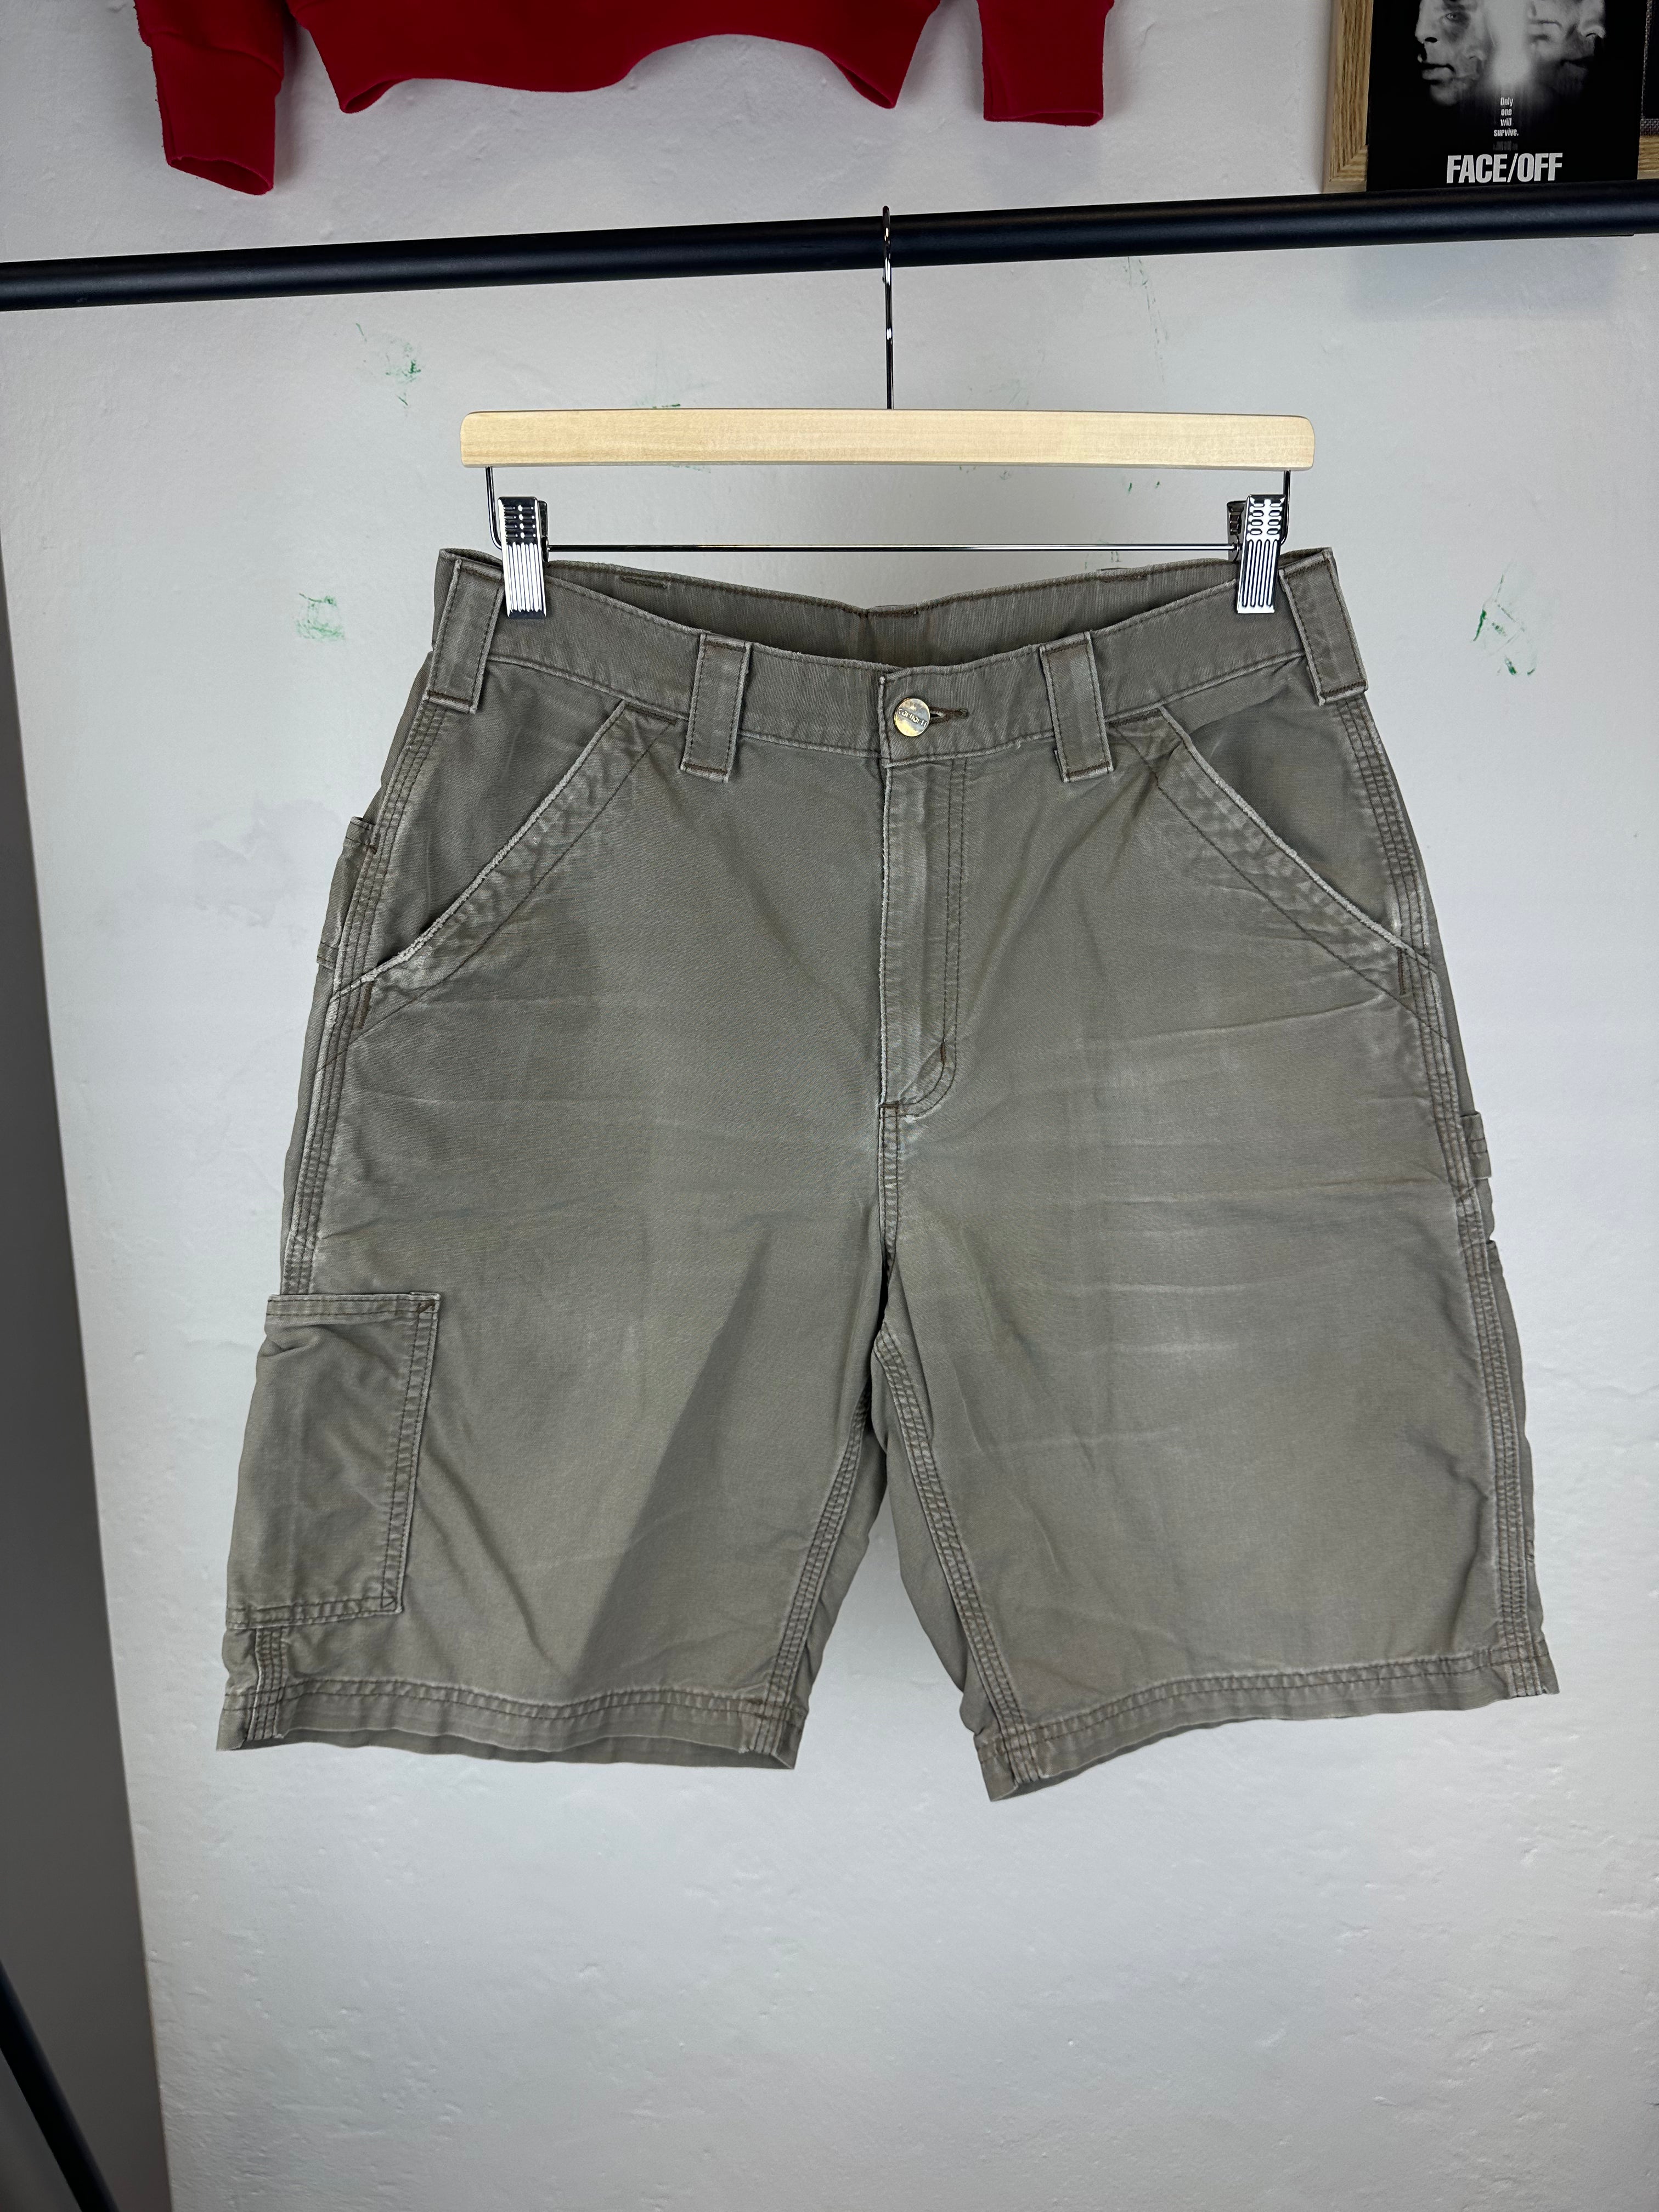 Vintage Carhartt Distressed Shorts - size 32